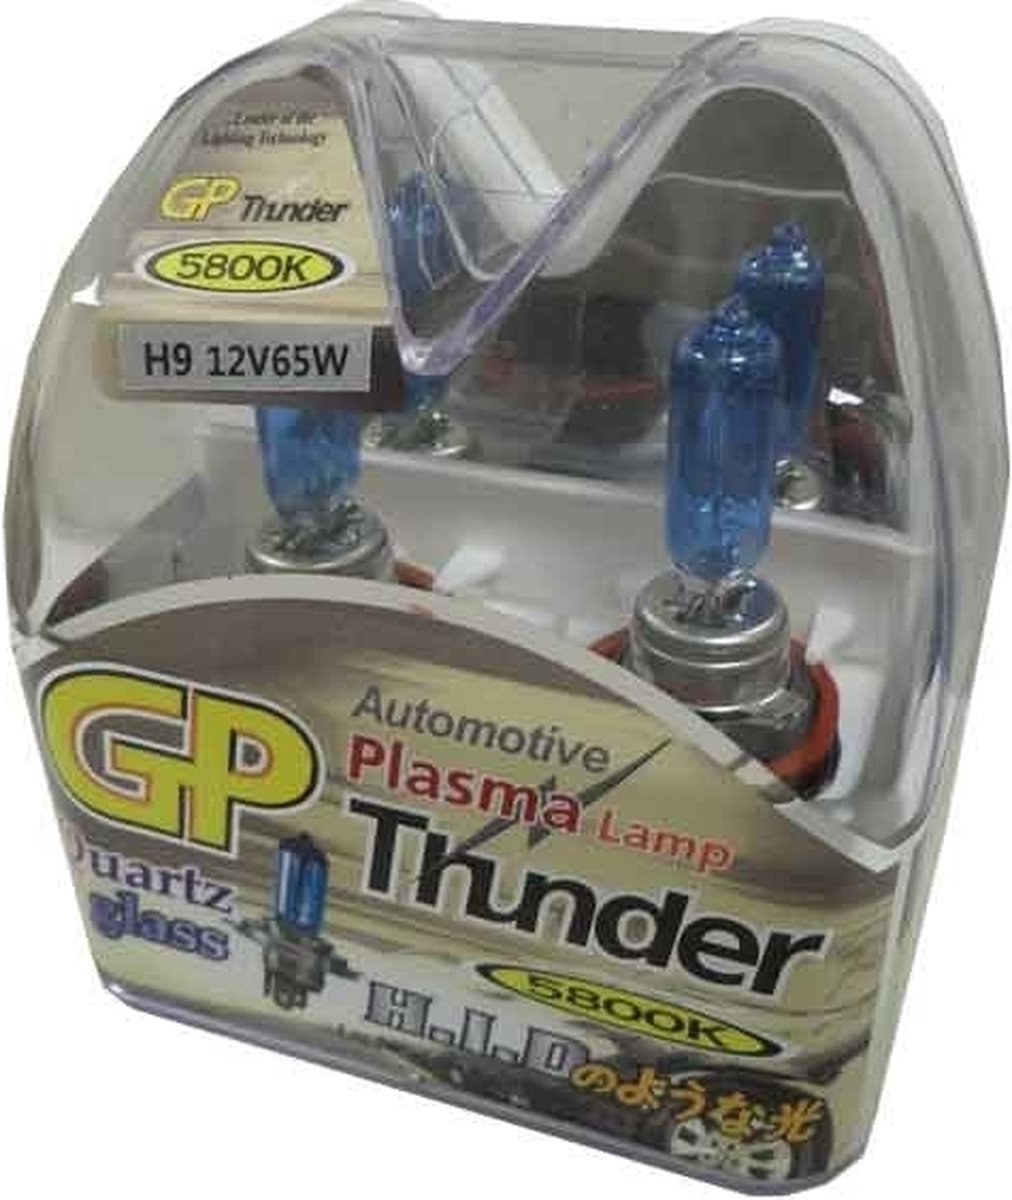 GP Thunder 5800k H9 65w Bright White Xenon Look